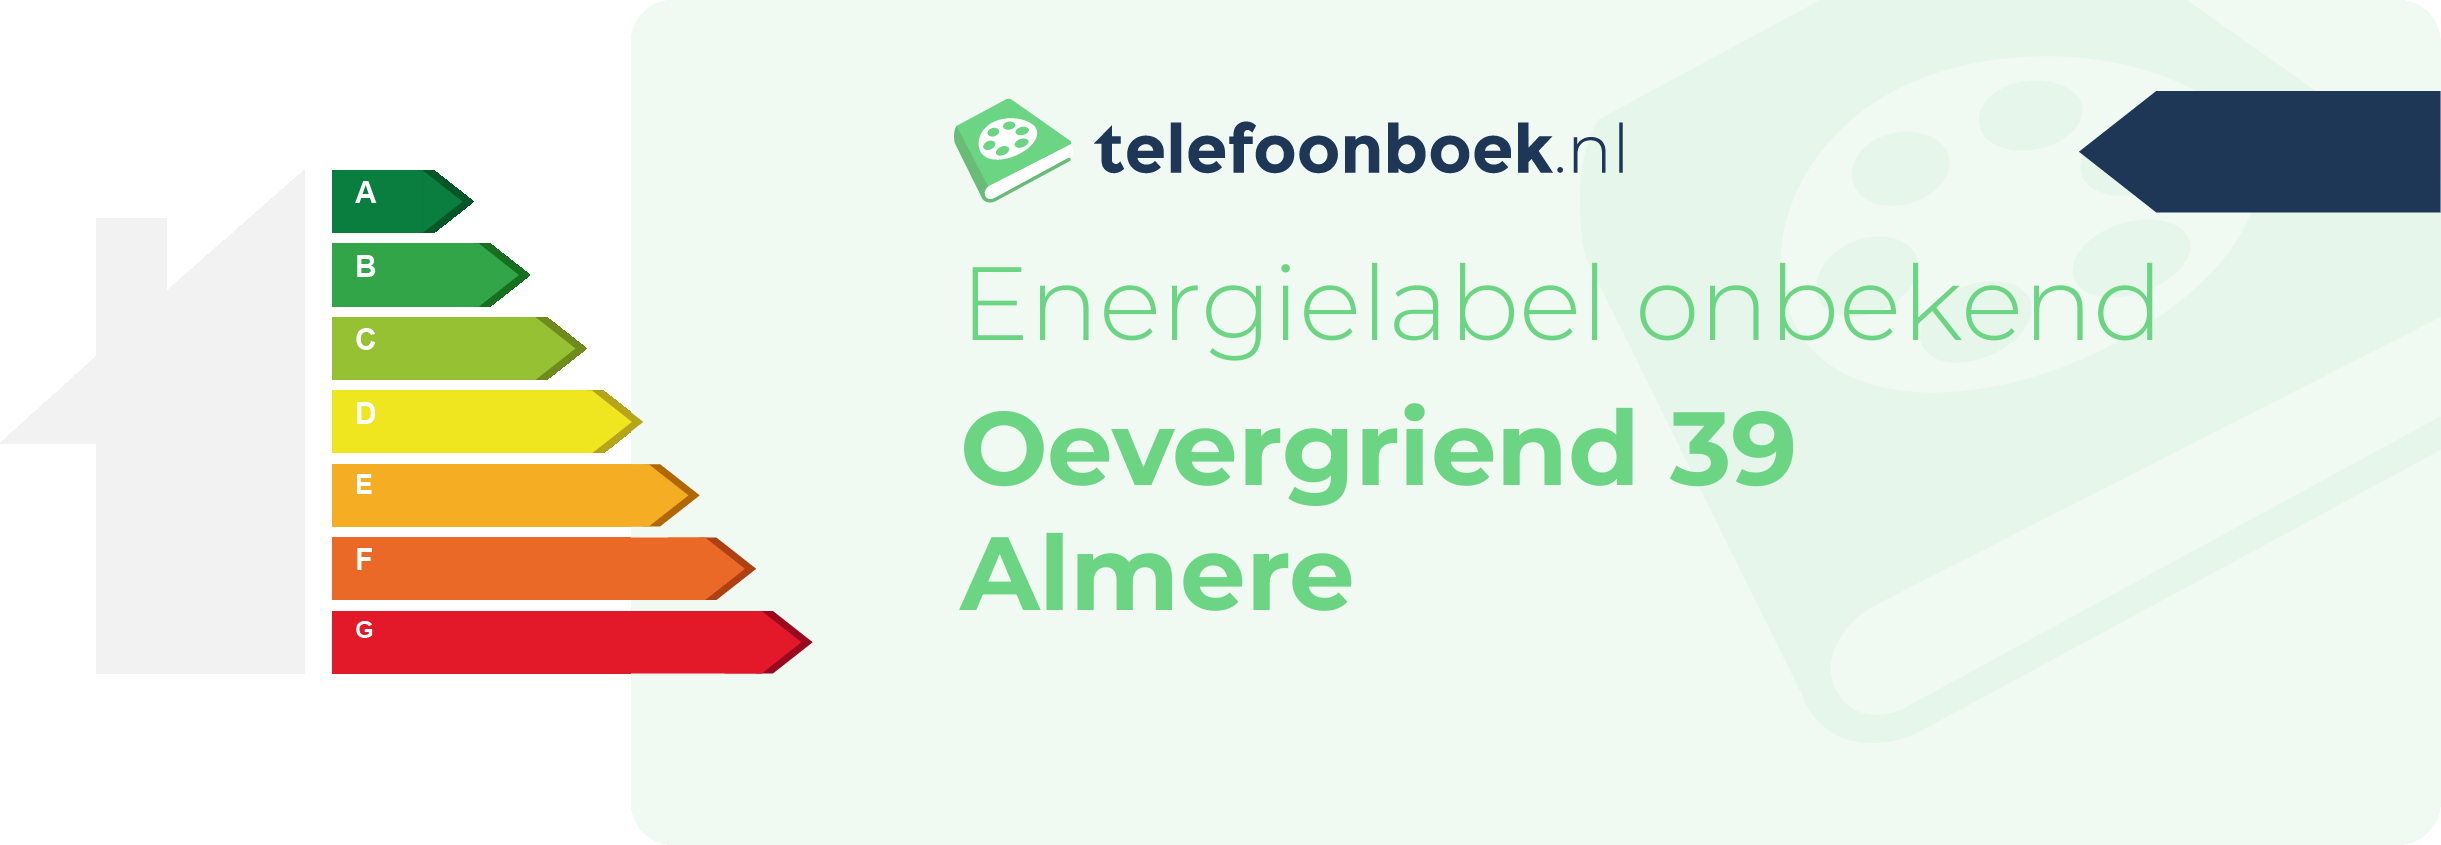 Energielabel Oevergriend 39 Almere